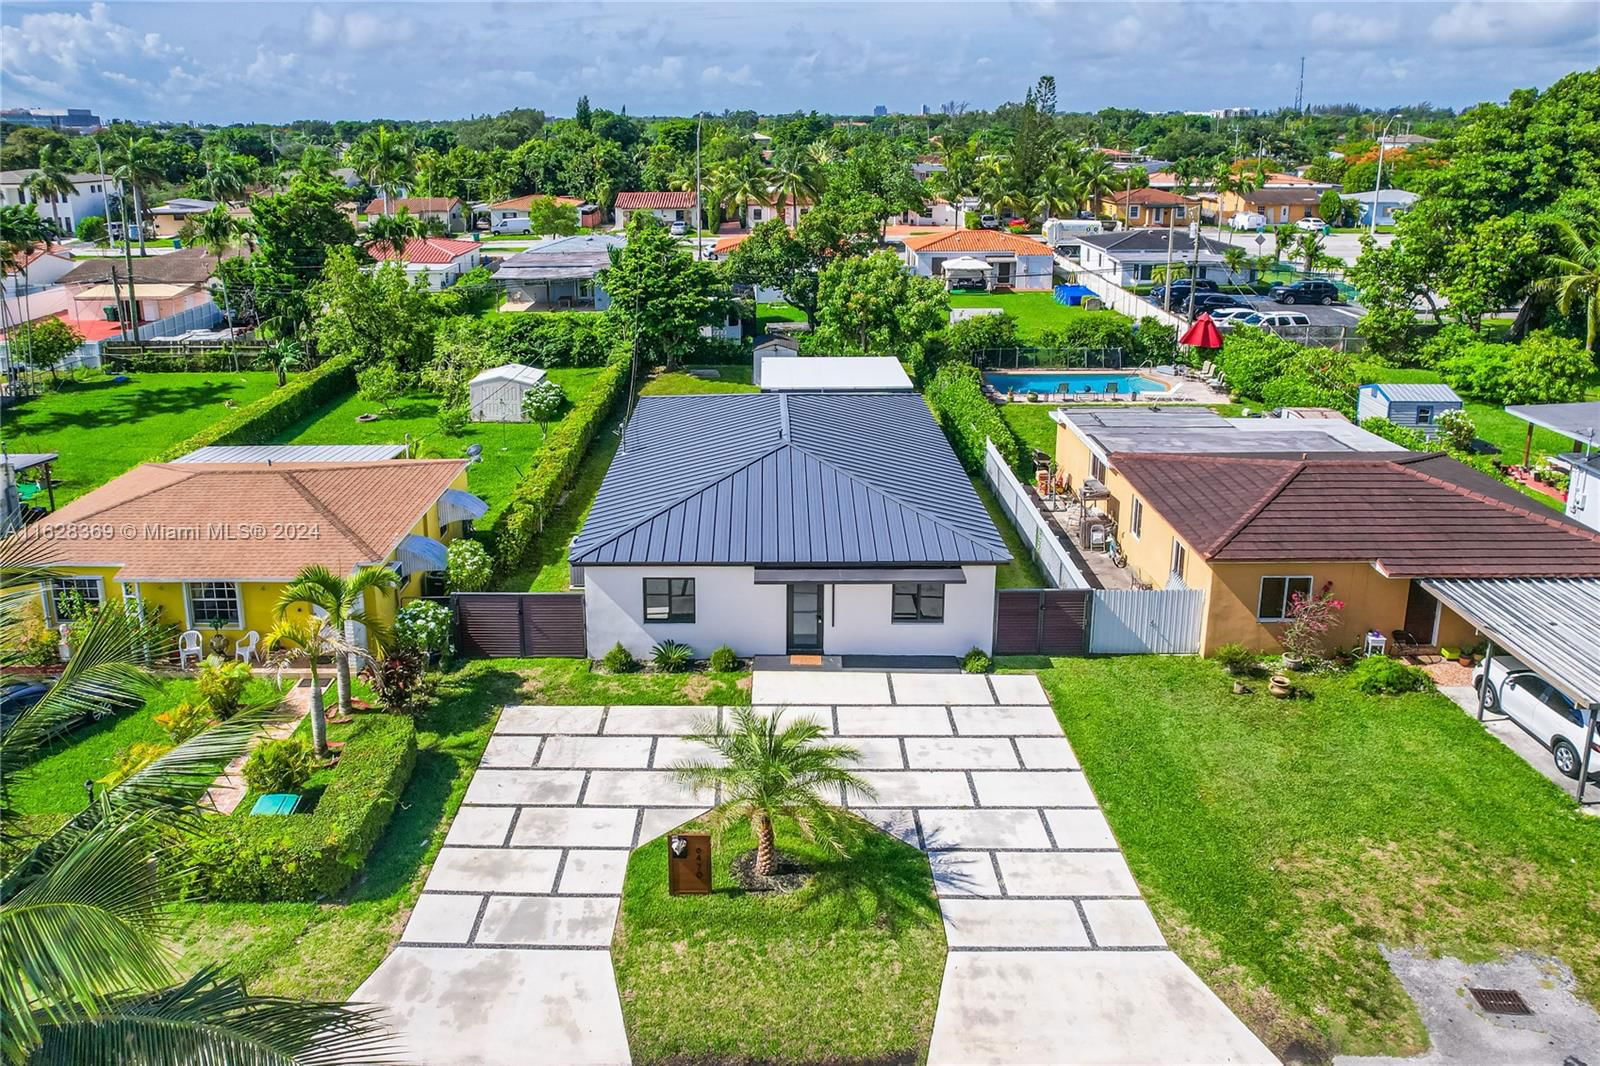 Real estate property located at 6470 23St, Miami-Dade County, TAMIAMI ACRES PLAN 2, Miami, FL